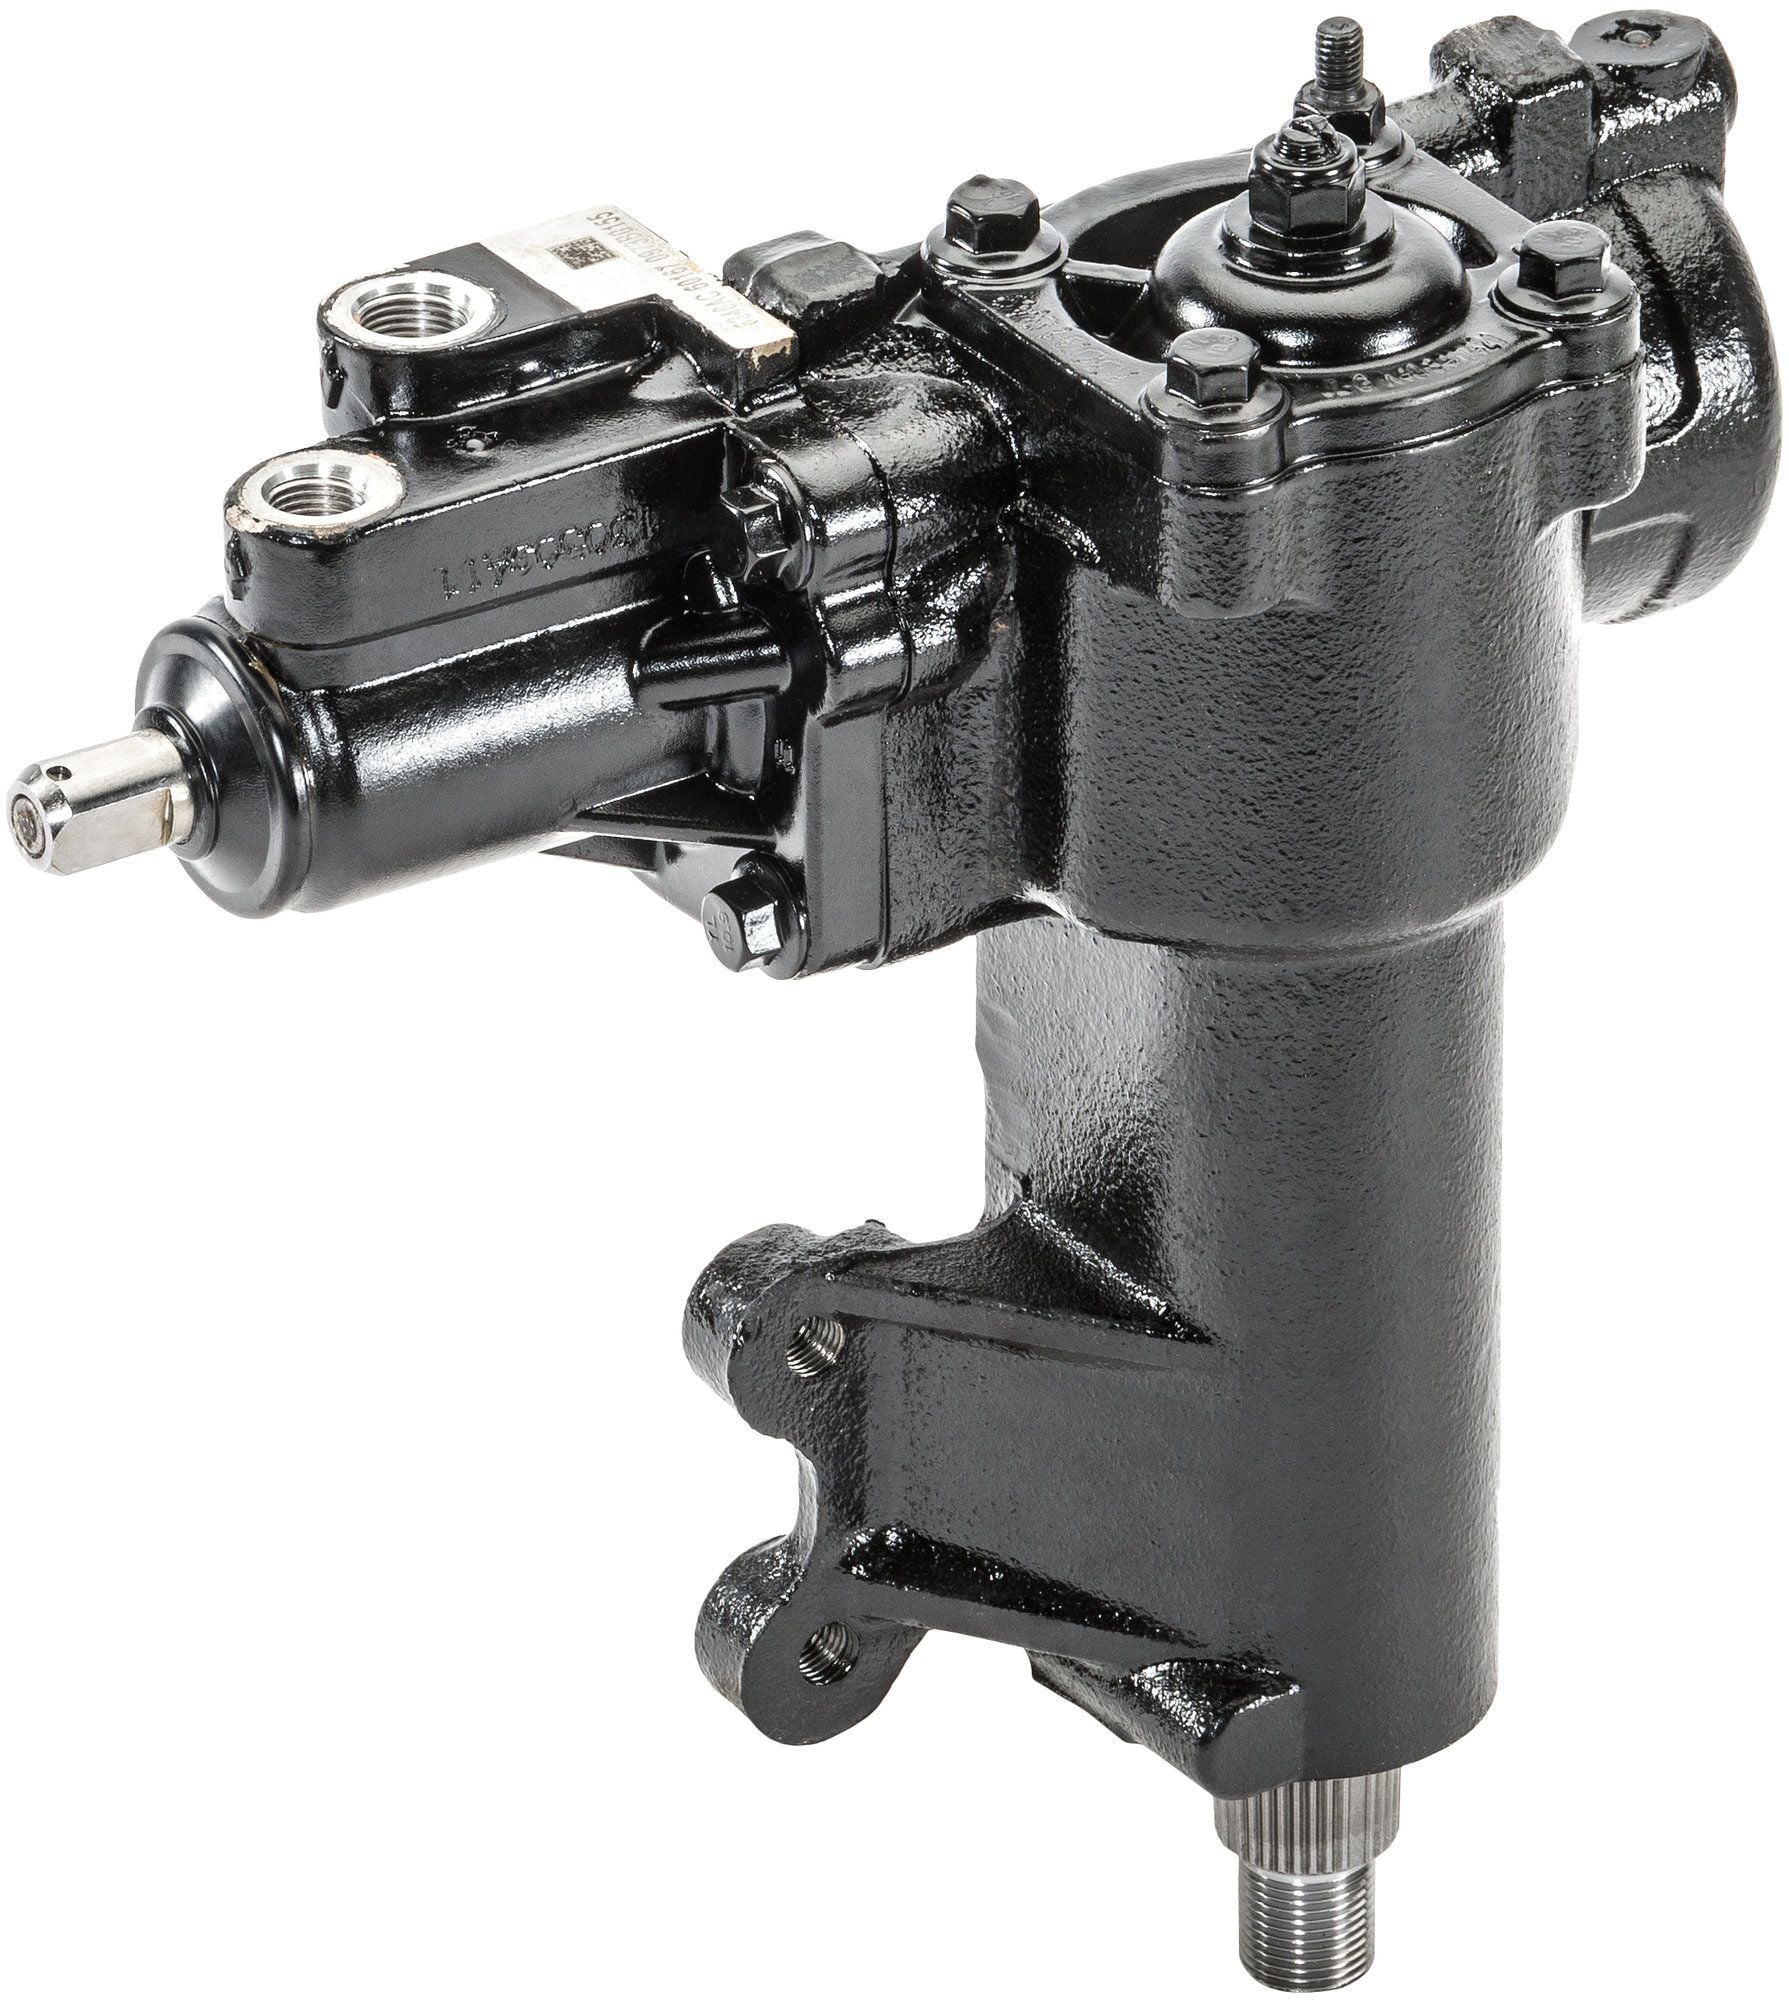 Steering/Suspension - JK Wrangler Mopar Power Steering Gear Box - Used - 2008 to 2018 Jeep Wrangler - Tustin, CA 92705, United States